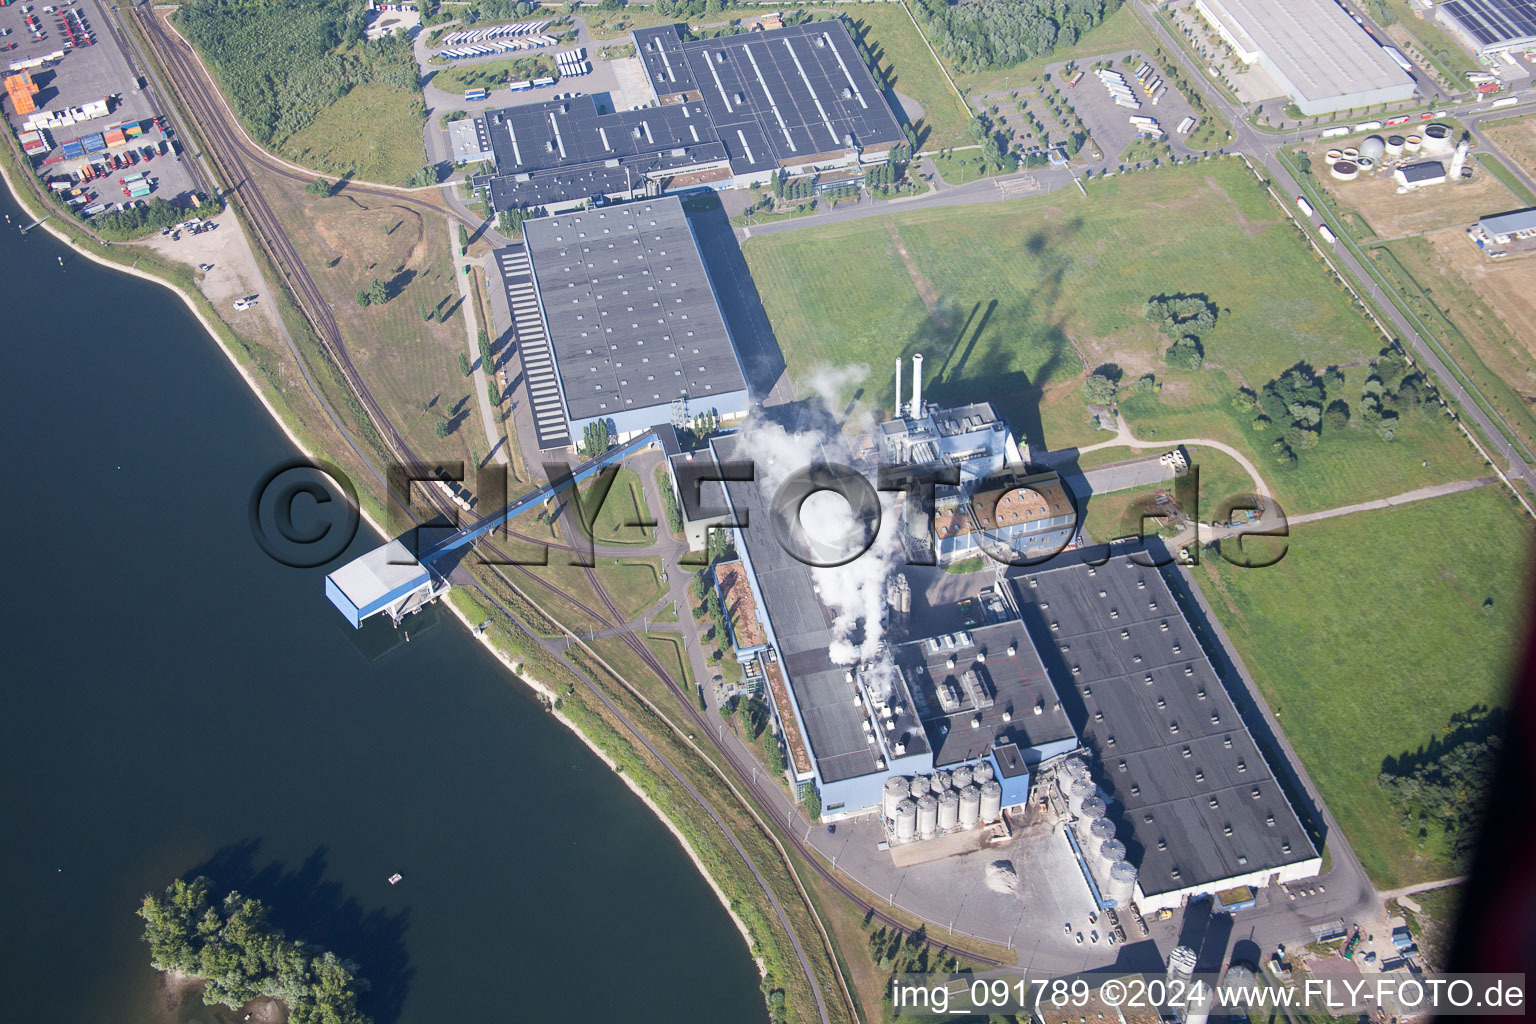 Aerial view of Oberwald industrial area, Rhine port Wörth in Wörth am Rhein in the state Rhineland-Palatinate, Germany